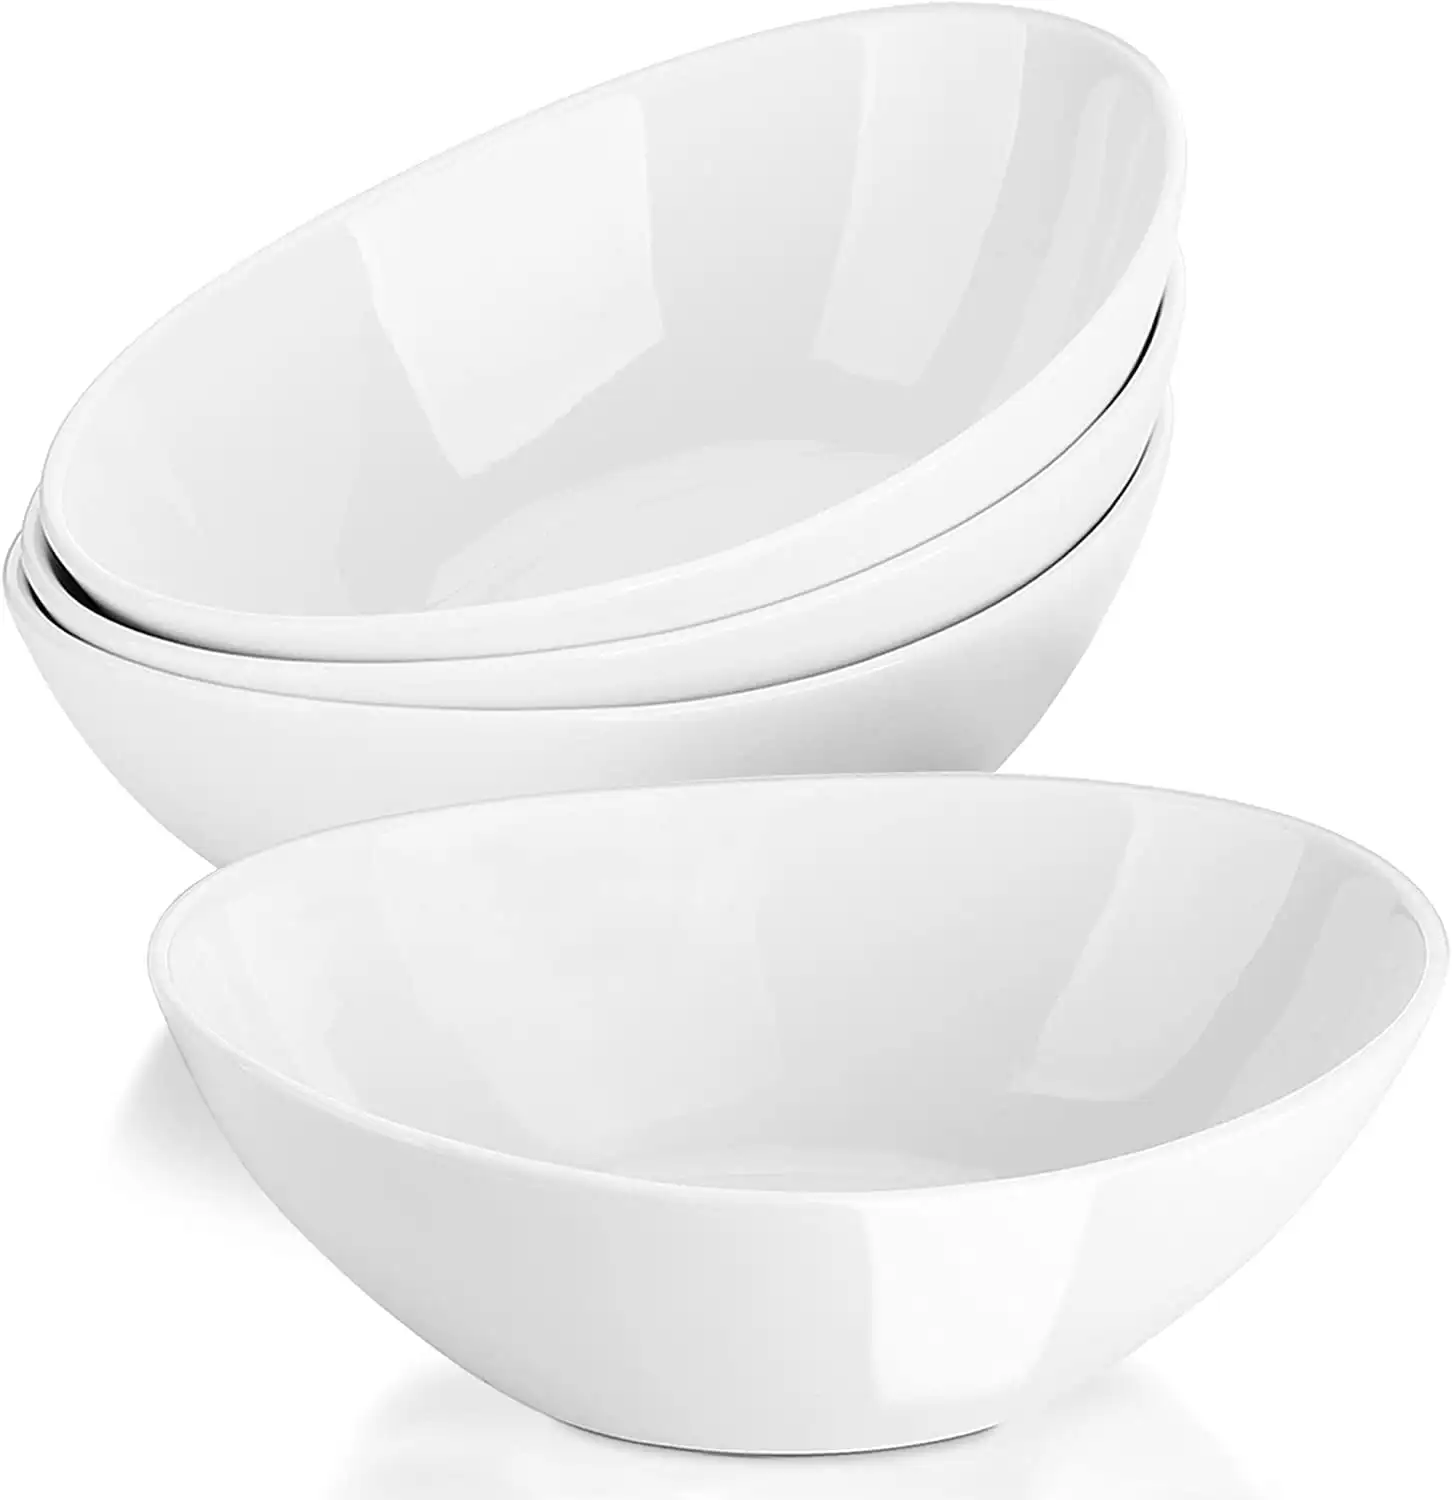 

9" Porcelain Serving Bowls, Large Serving Dishes, 30 Ounce for Salads, Side Dishes, Pasta, Oval Shape, Microwave & Dishwasher Sa